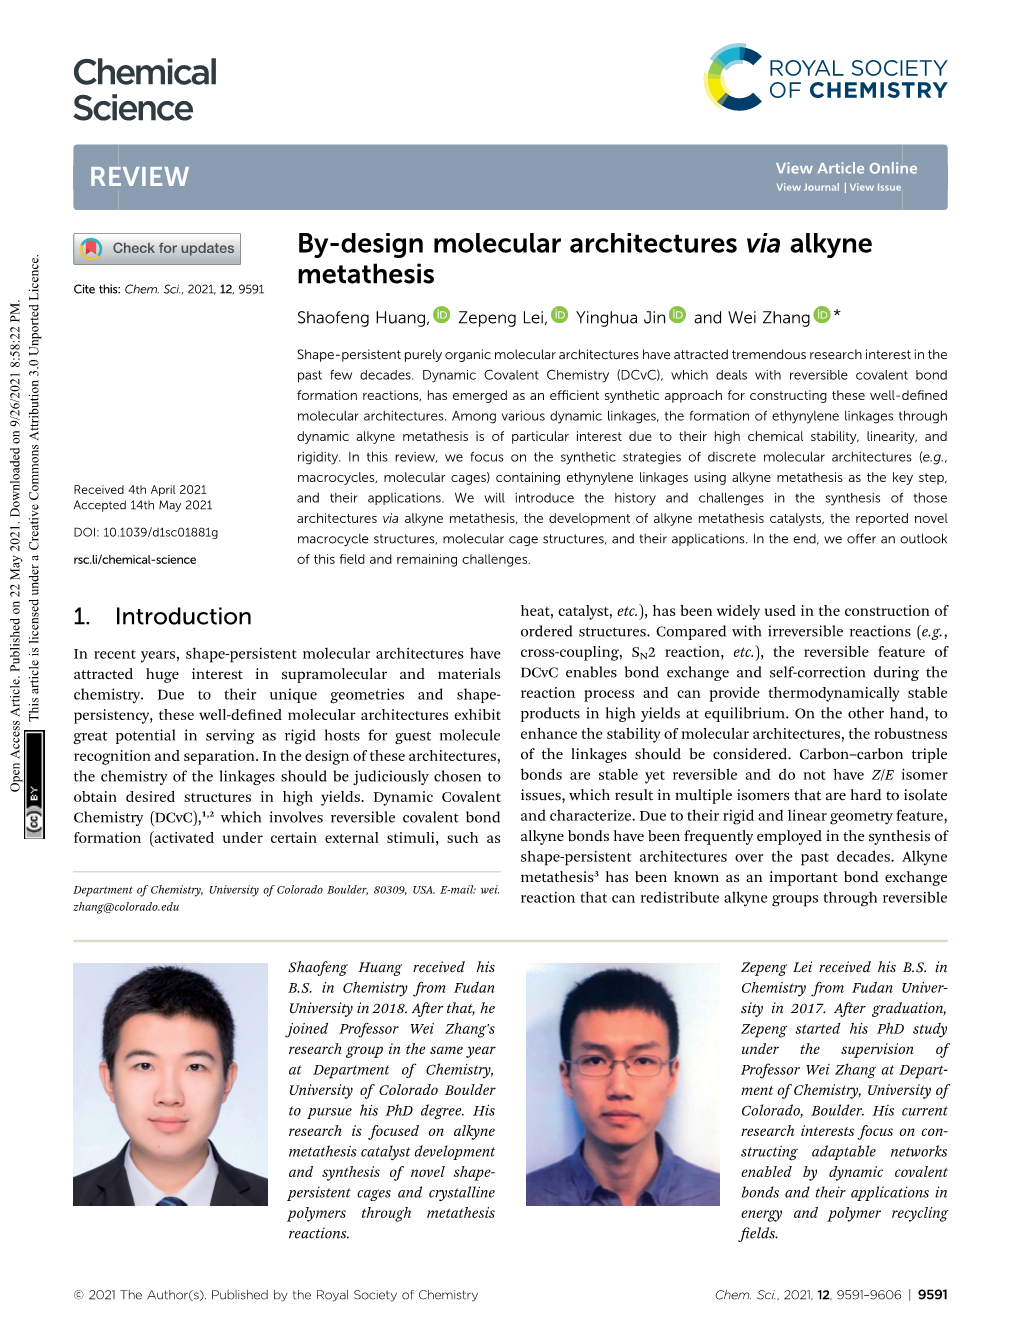 By-Design Molecular Architectures Via Alkyne Metathesis Cite This: Chem